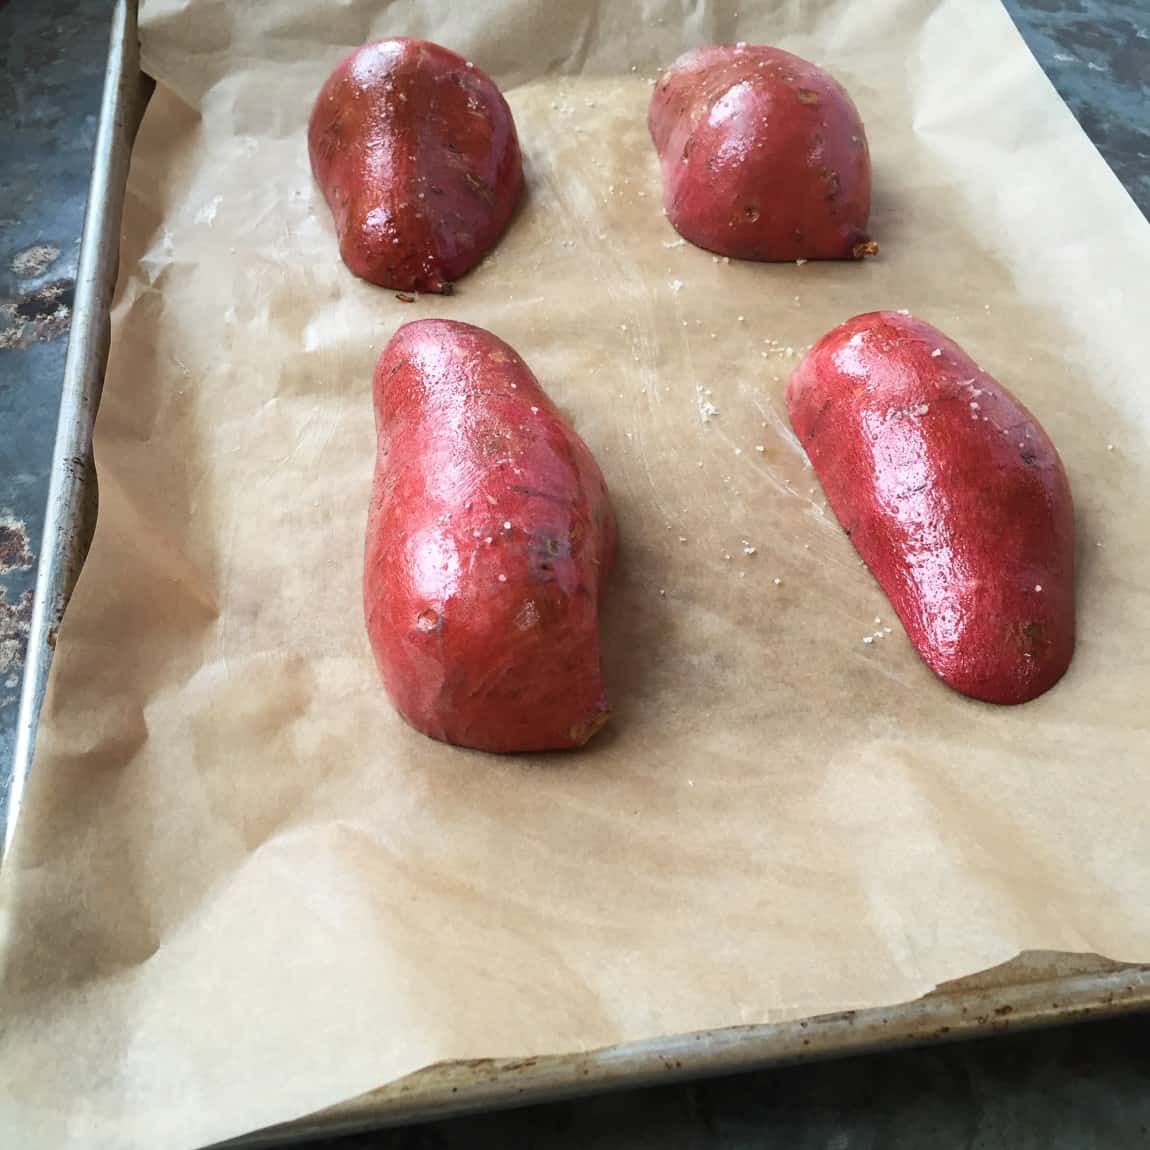 Sweet potatoes face down on baking sheet